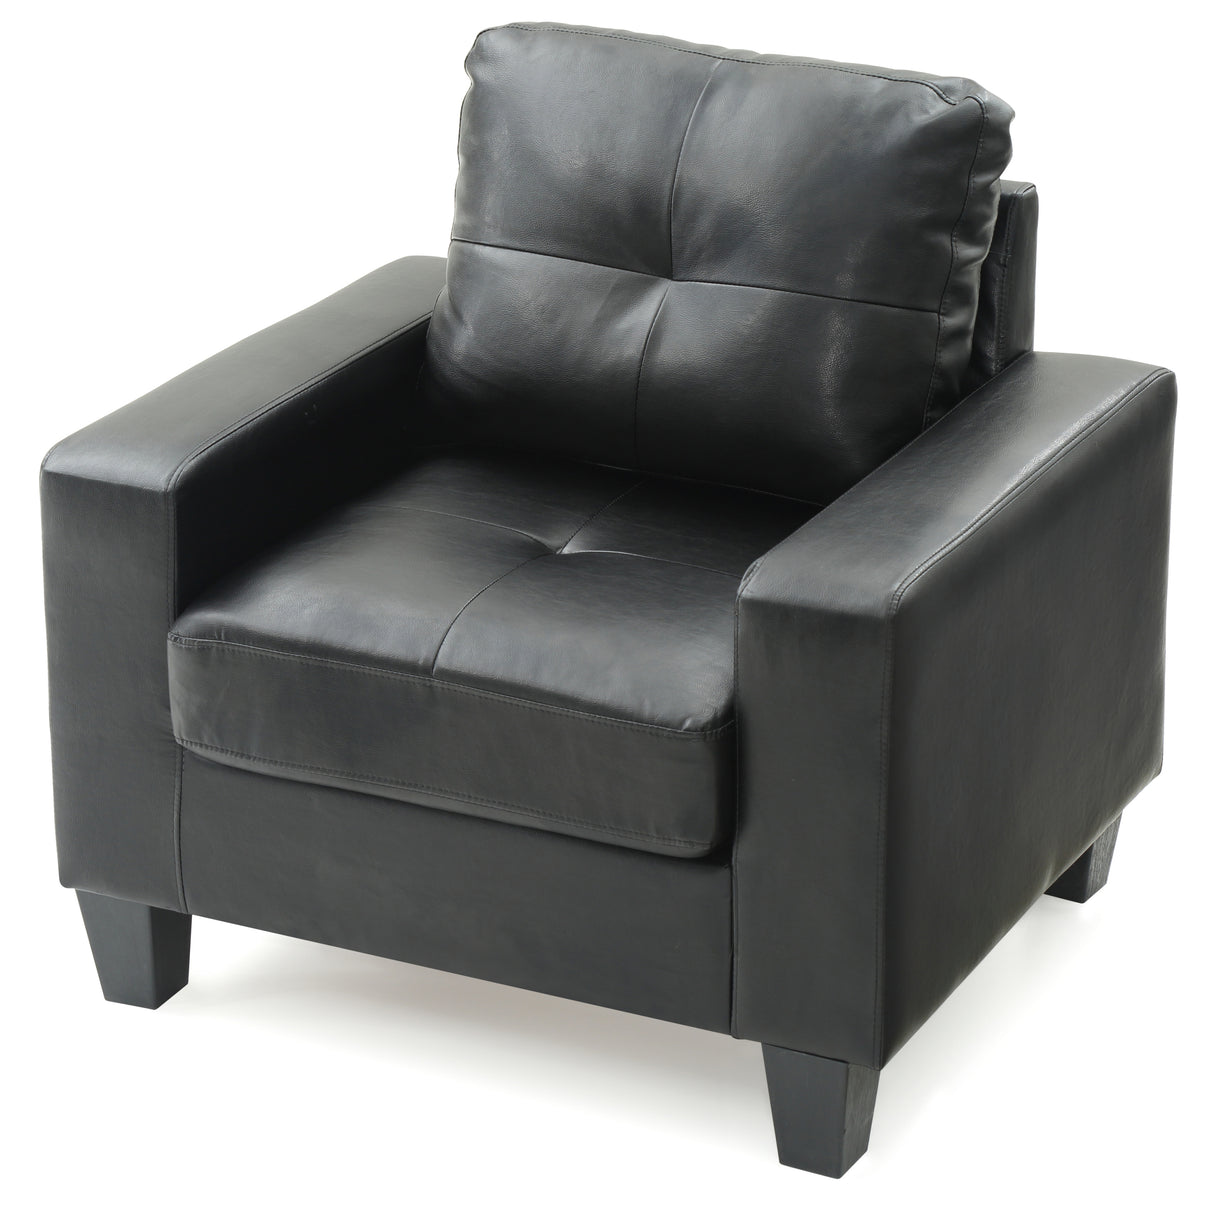 Glory Furniture Newbury G463A-C Newbury Club Chair , BLACK - Home Elegance USA